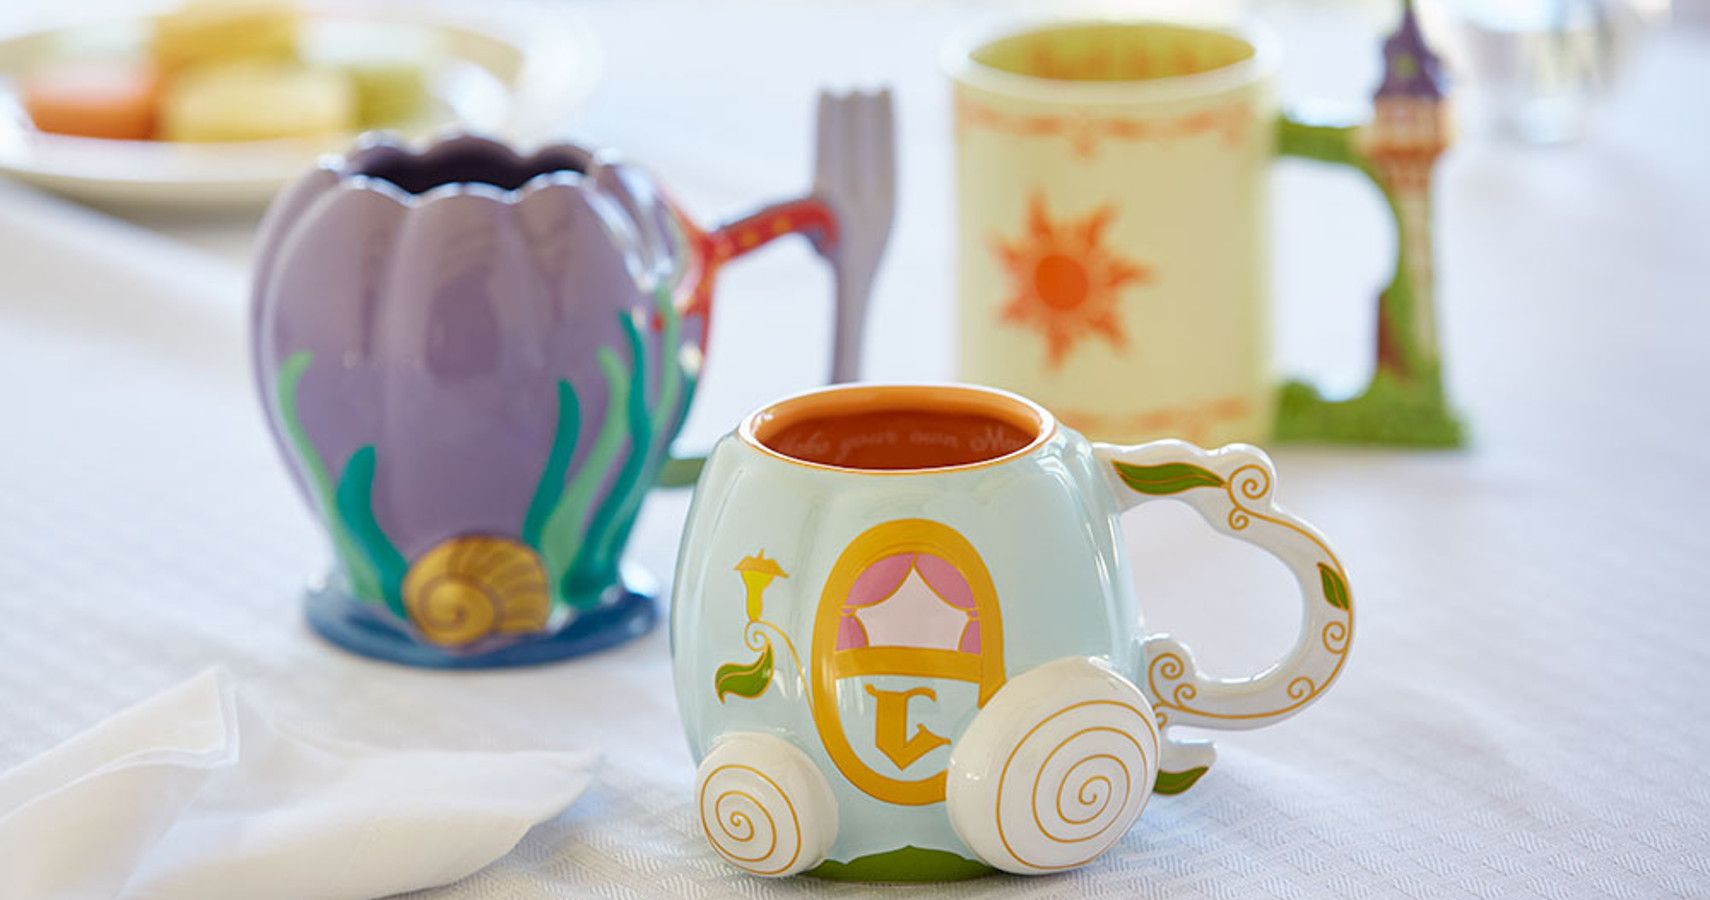 These New Disney Princess Mugs Will Certainly Spark Joy